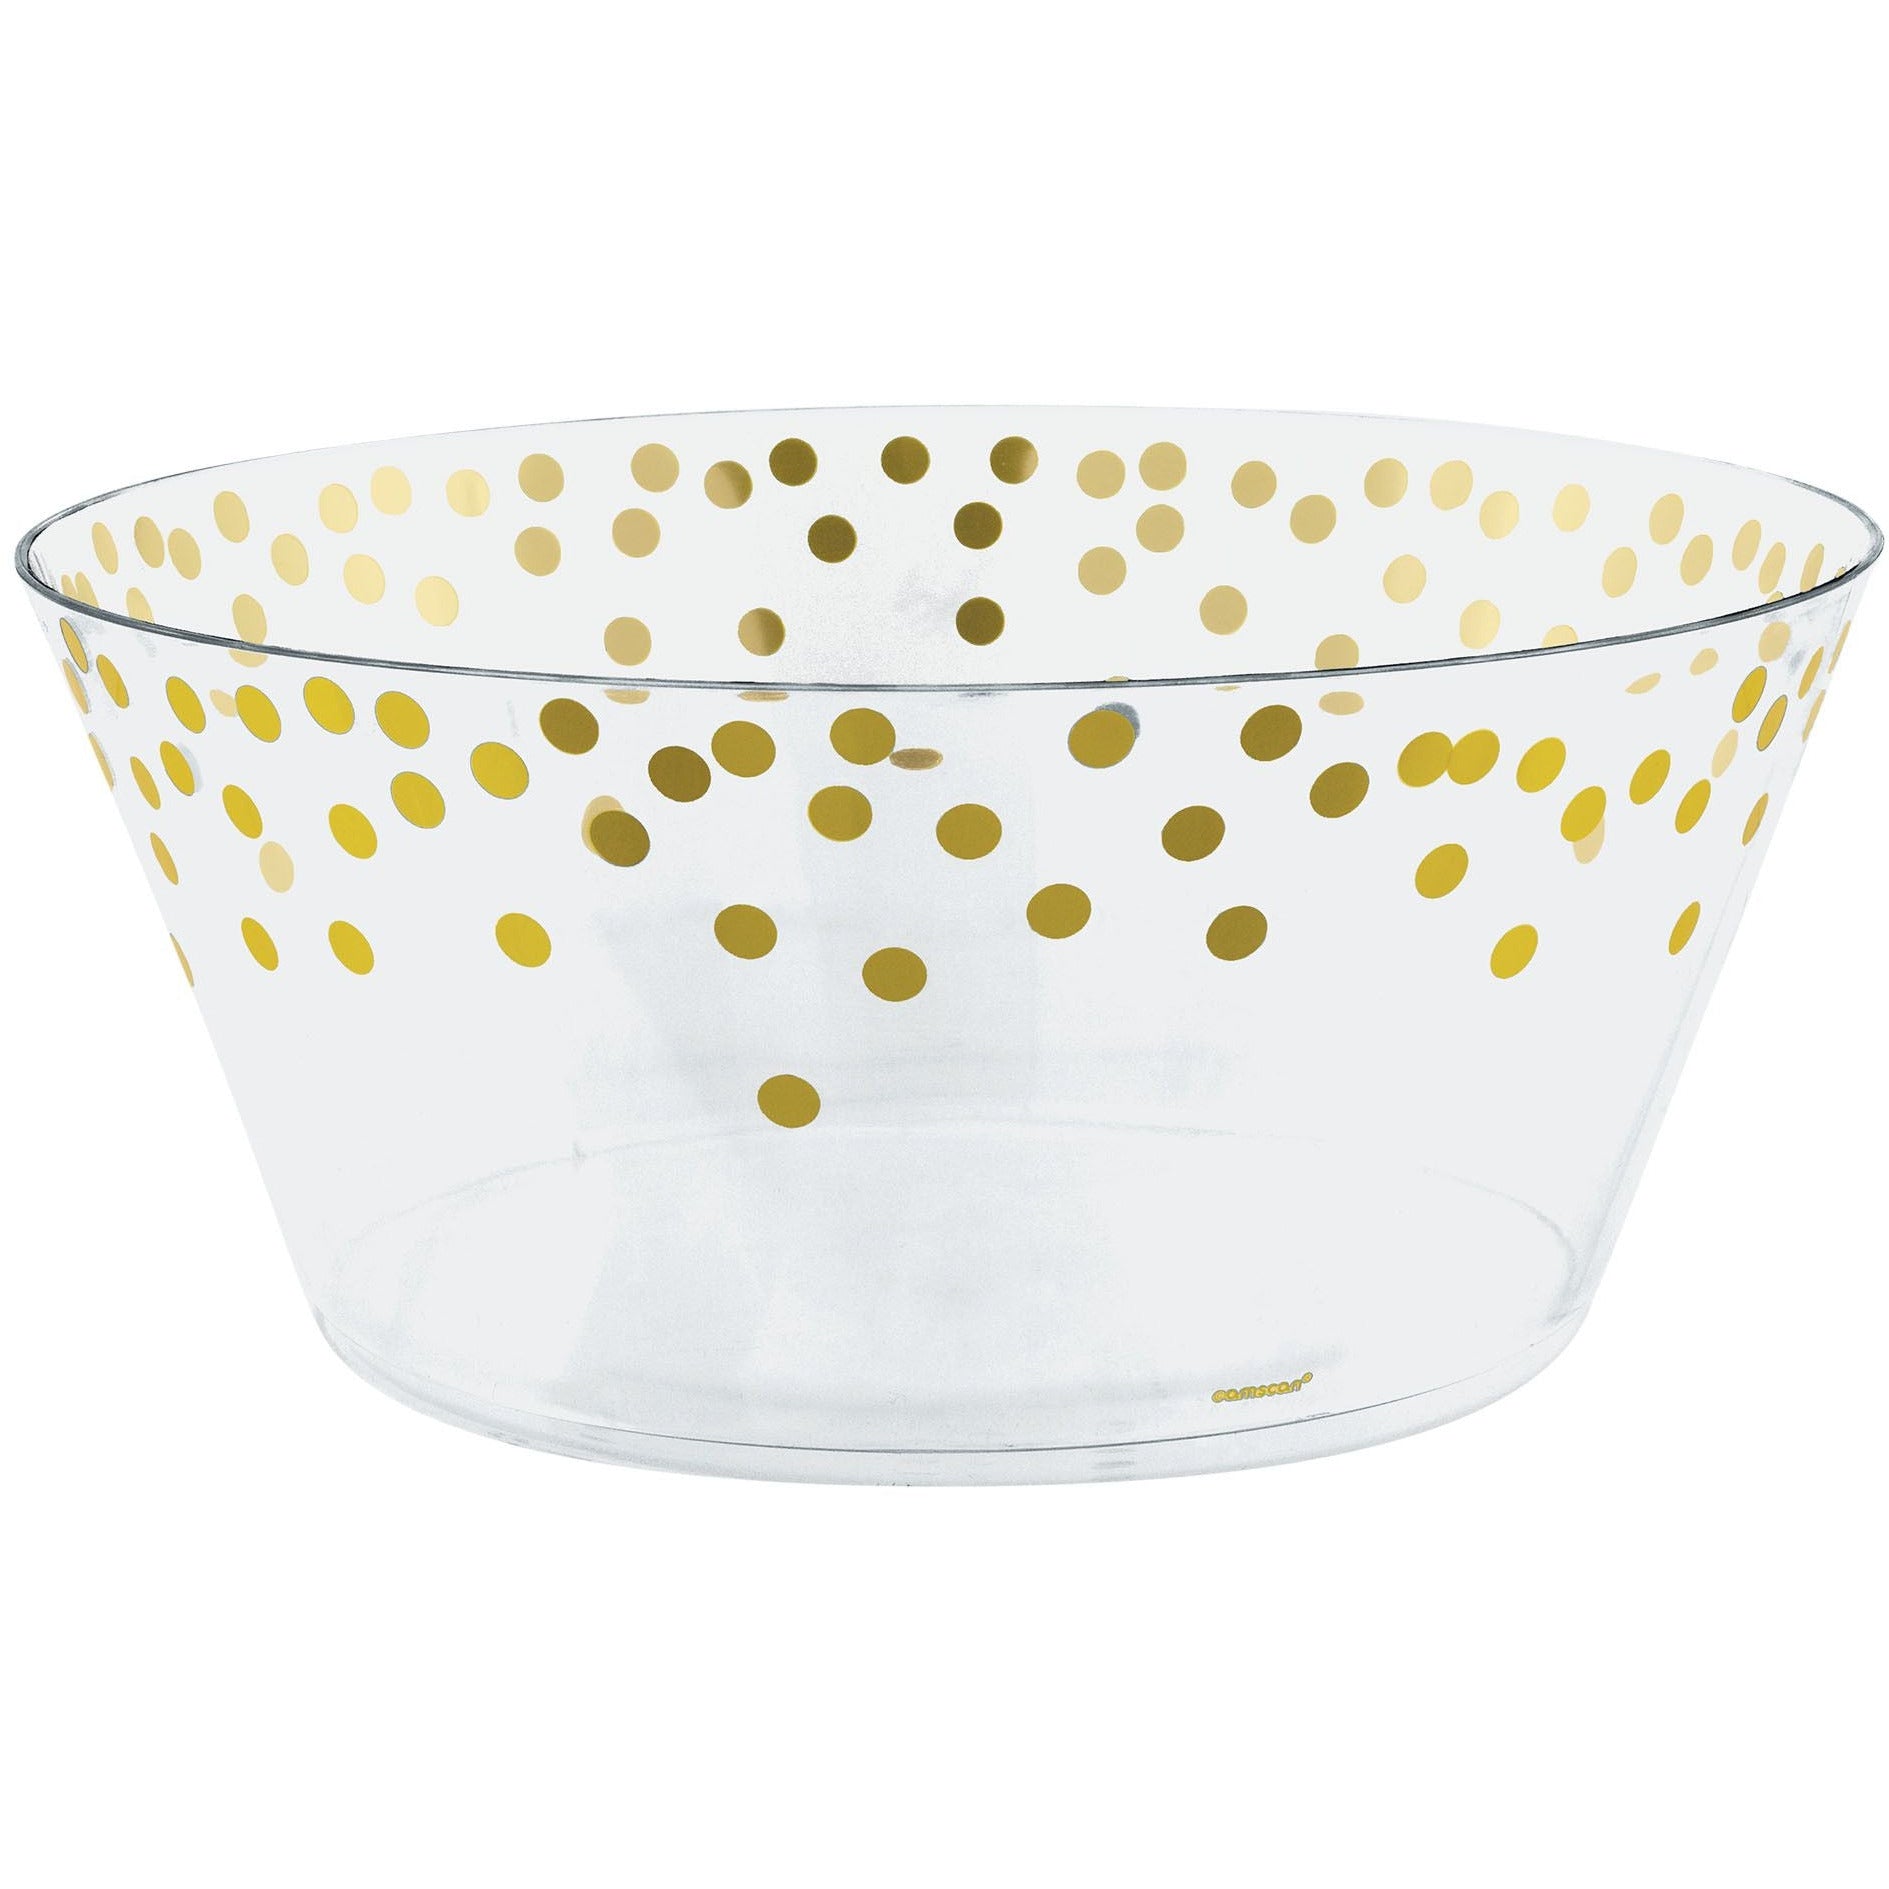 Amscan BASIC Plastic Serving Bowl Large -Gold Dots